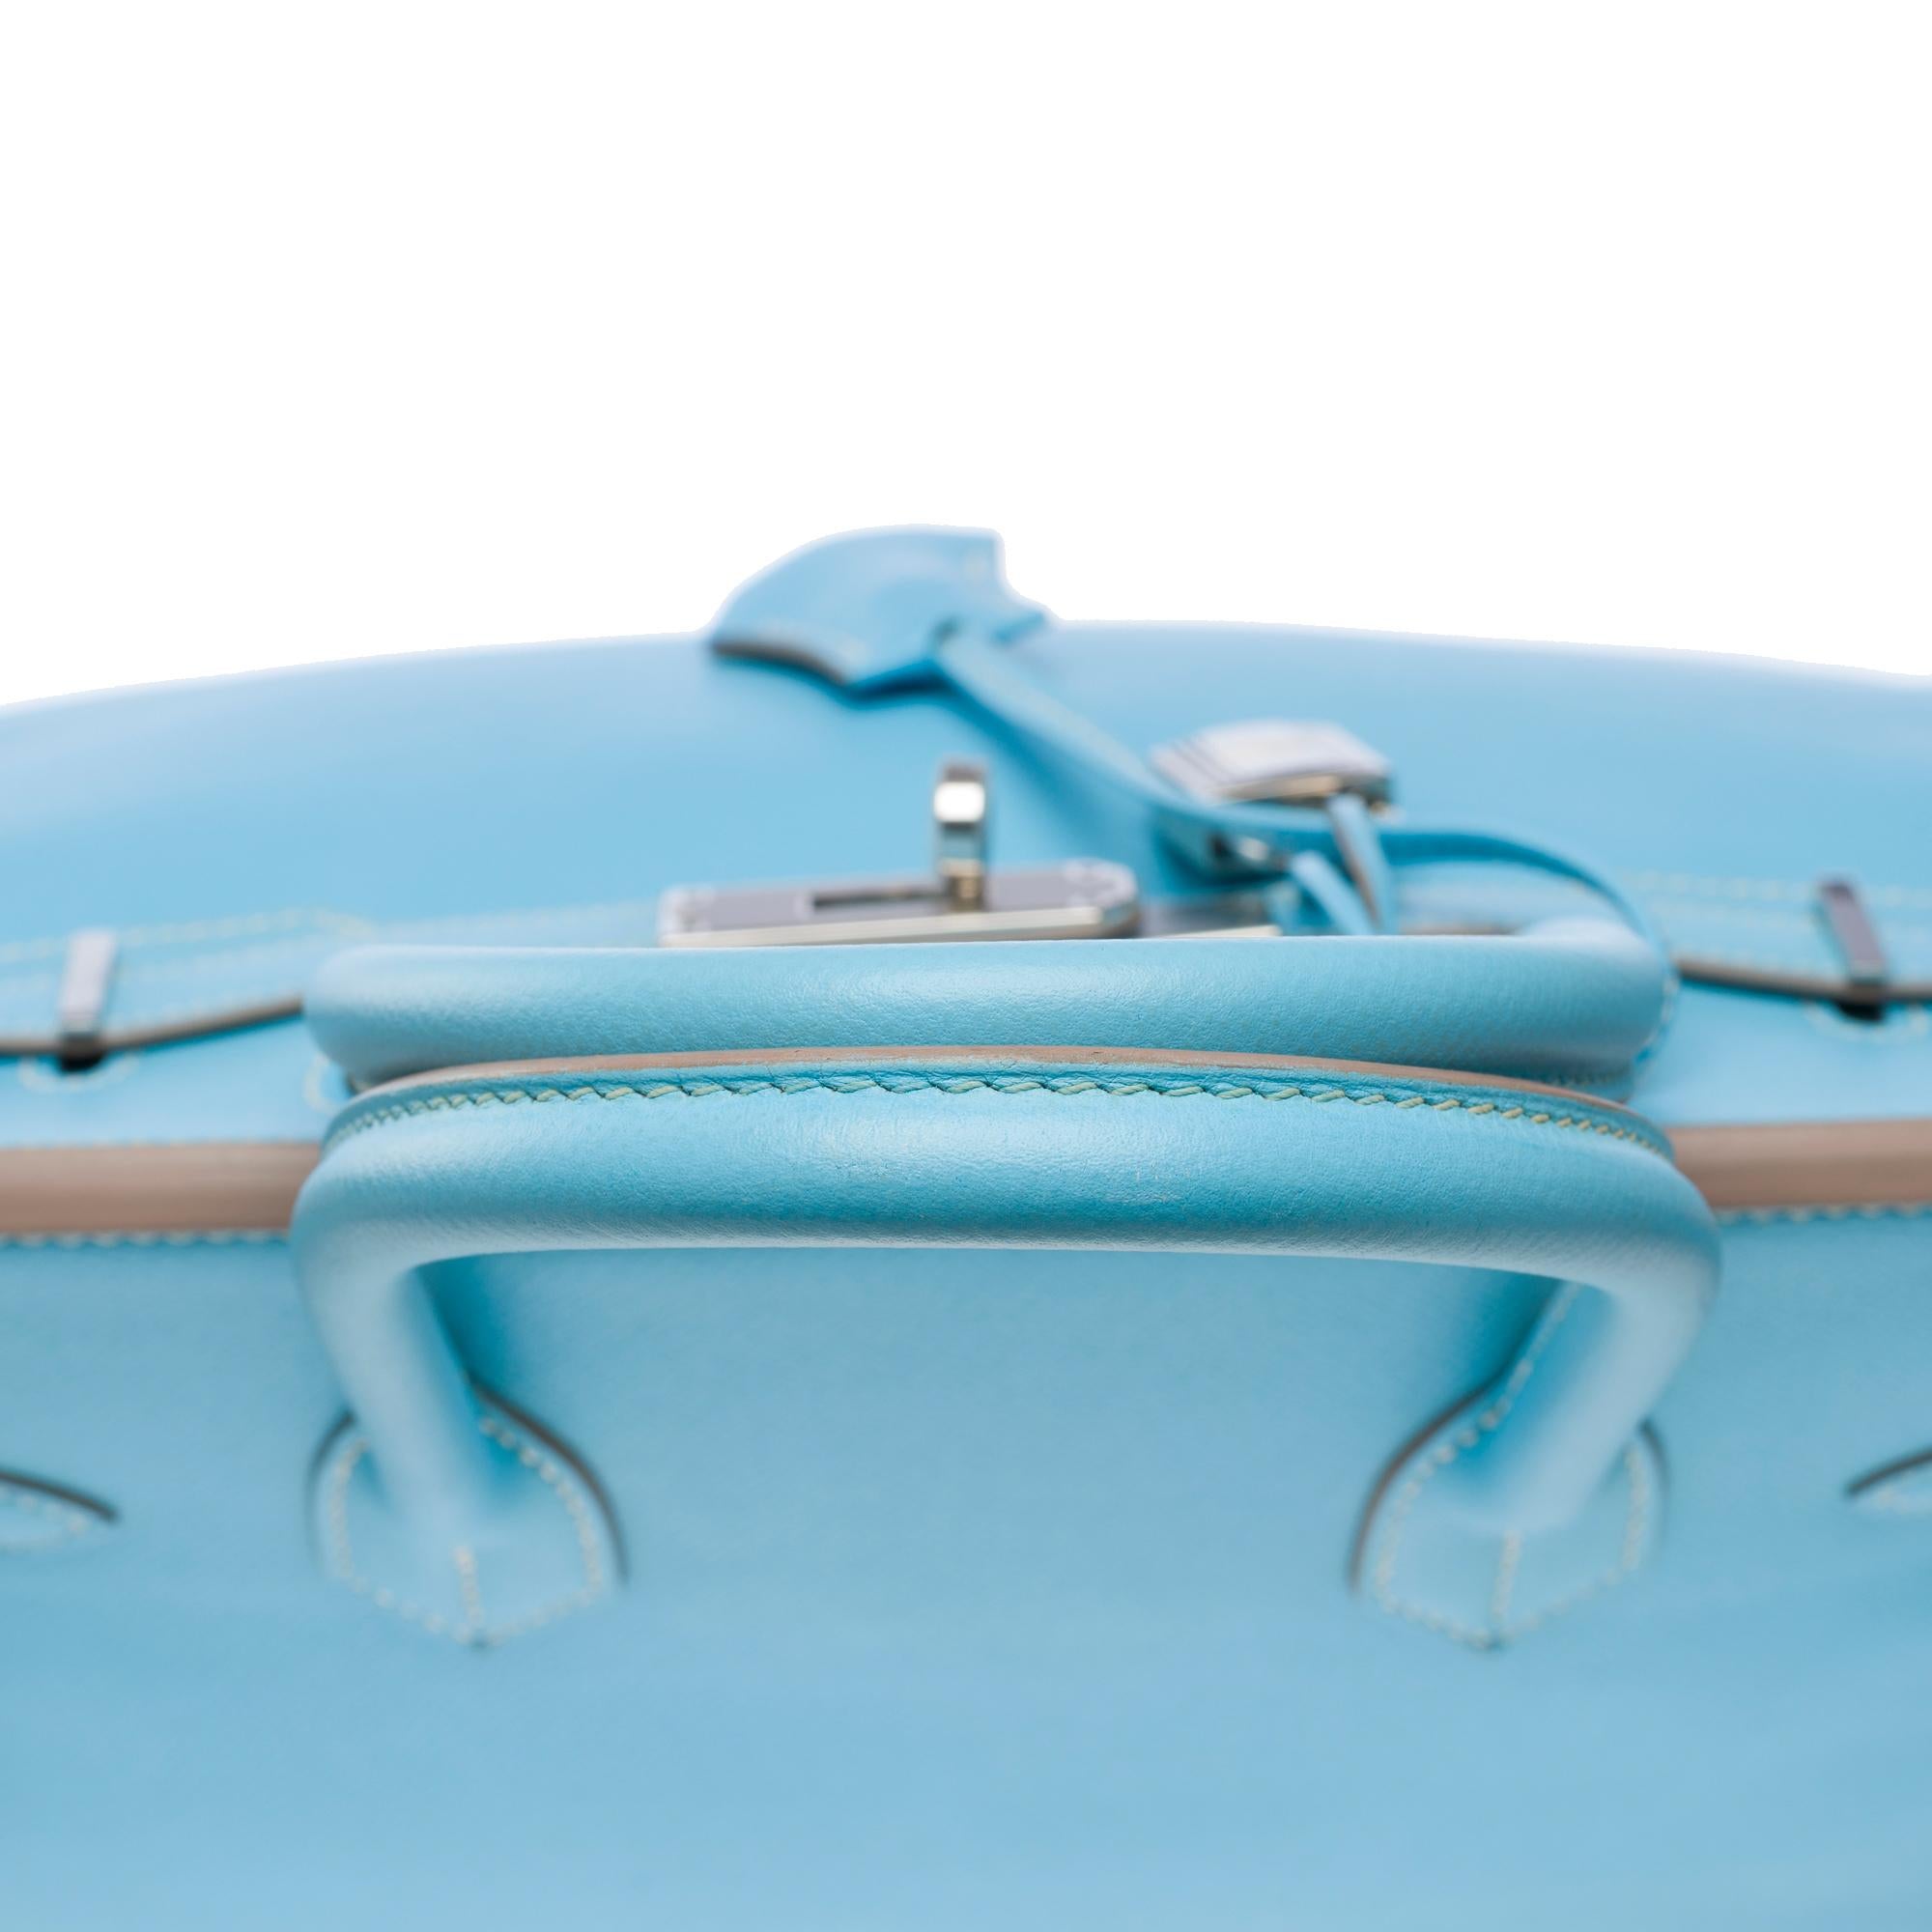 Rare Hermes Birkin 30 Candy Edition handbag in Celeste Blue Epsom leather, SHW 7